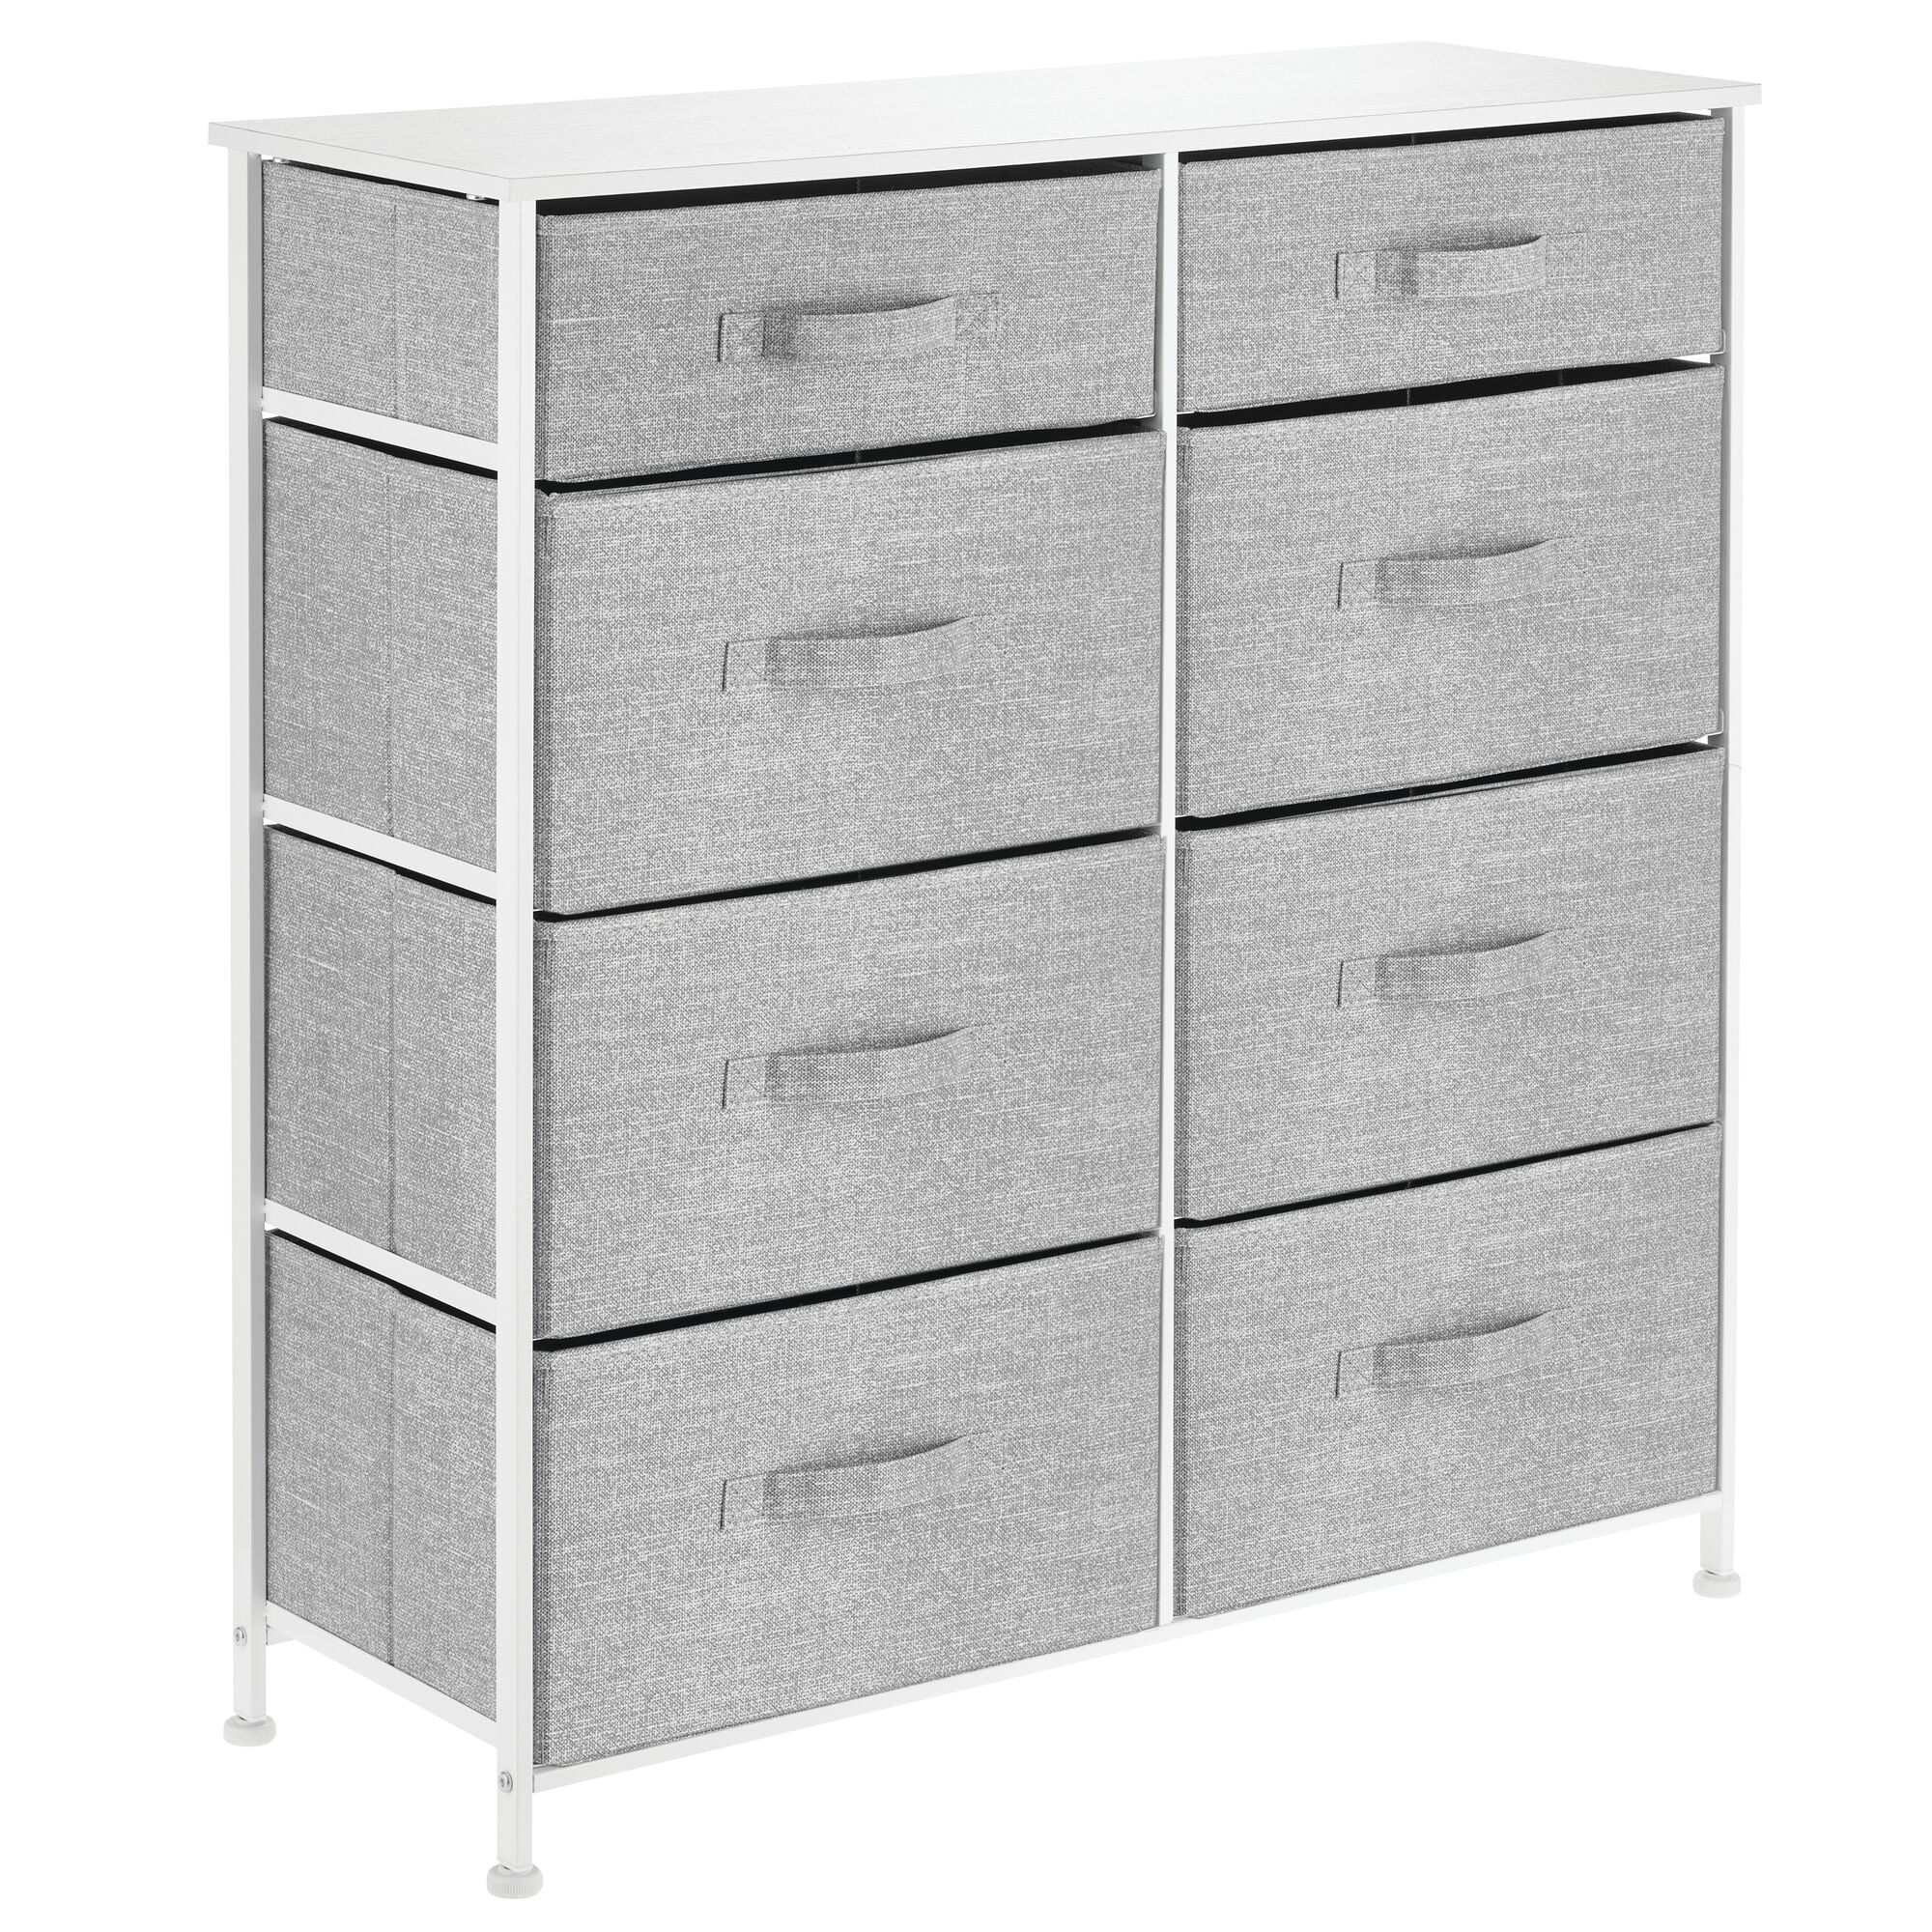 Pyraxis Dresser with 8 Drawers organizer Storage Auction